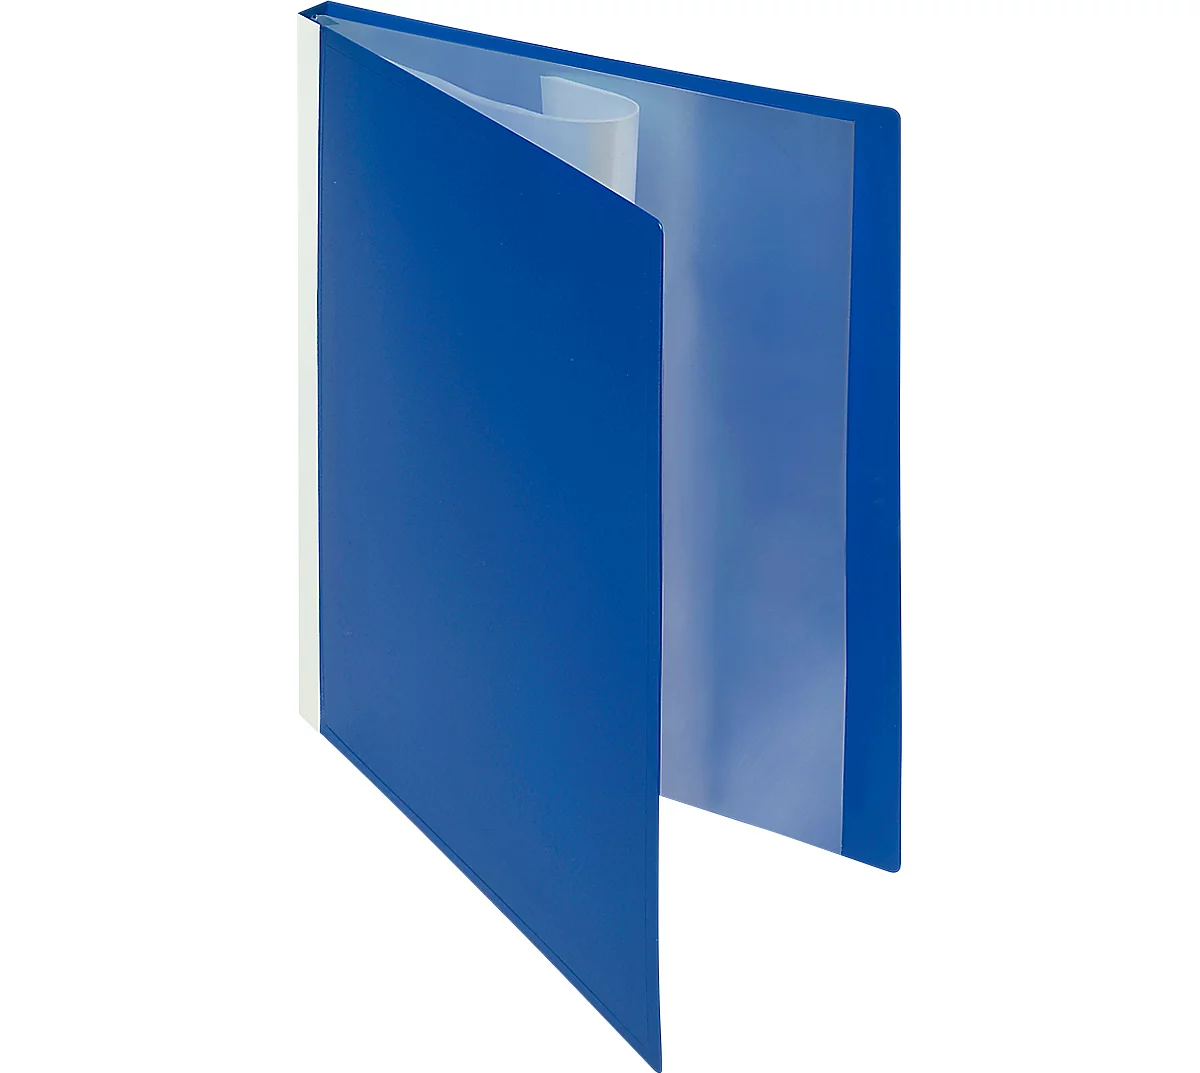 FolderSys PP-Sichtbuch, für DIN A4, 20 Sichthüllen, blau